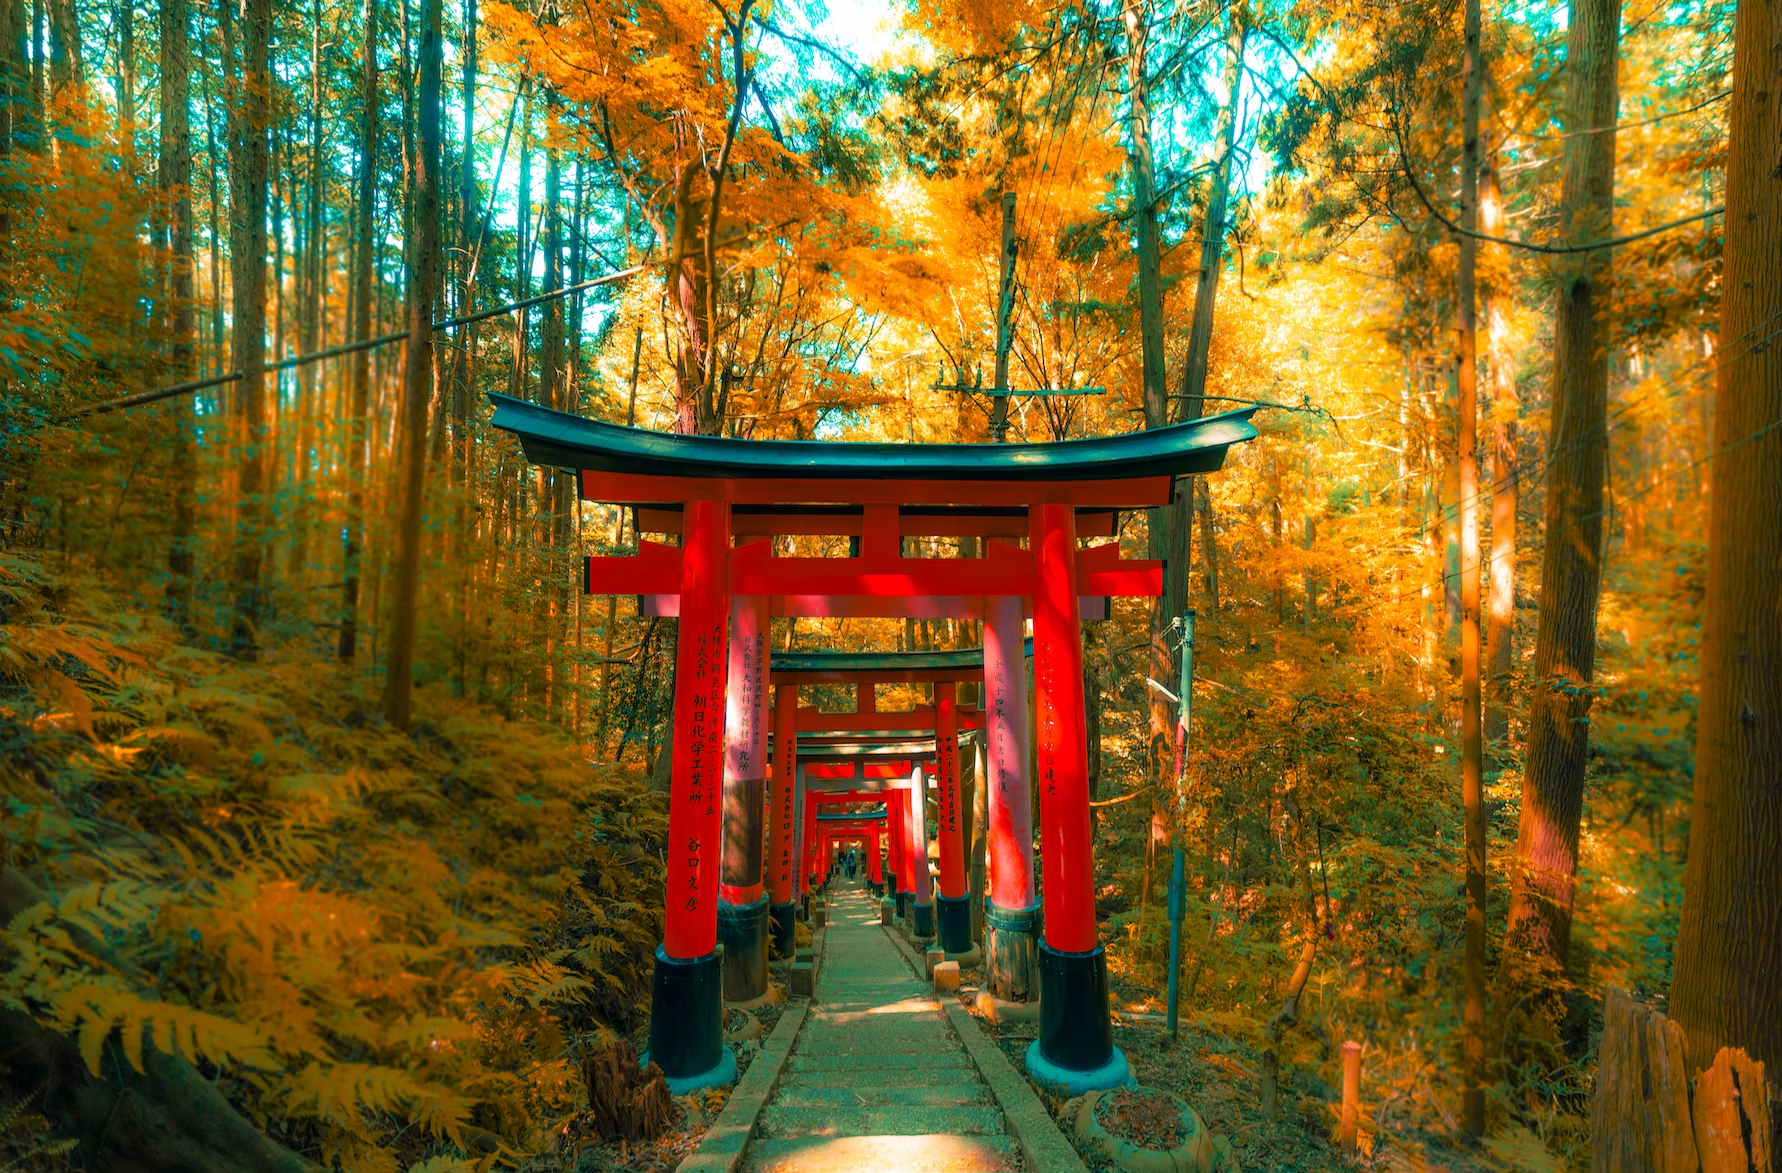 The Golden Pavilion of Kyoto